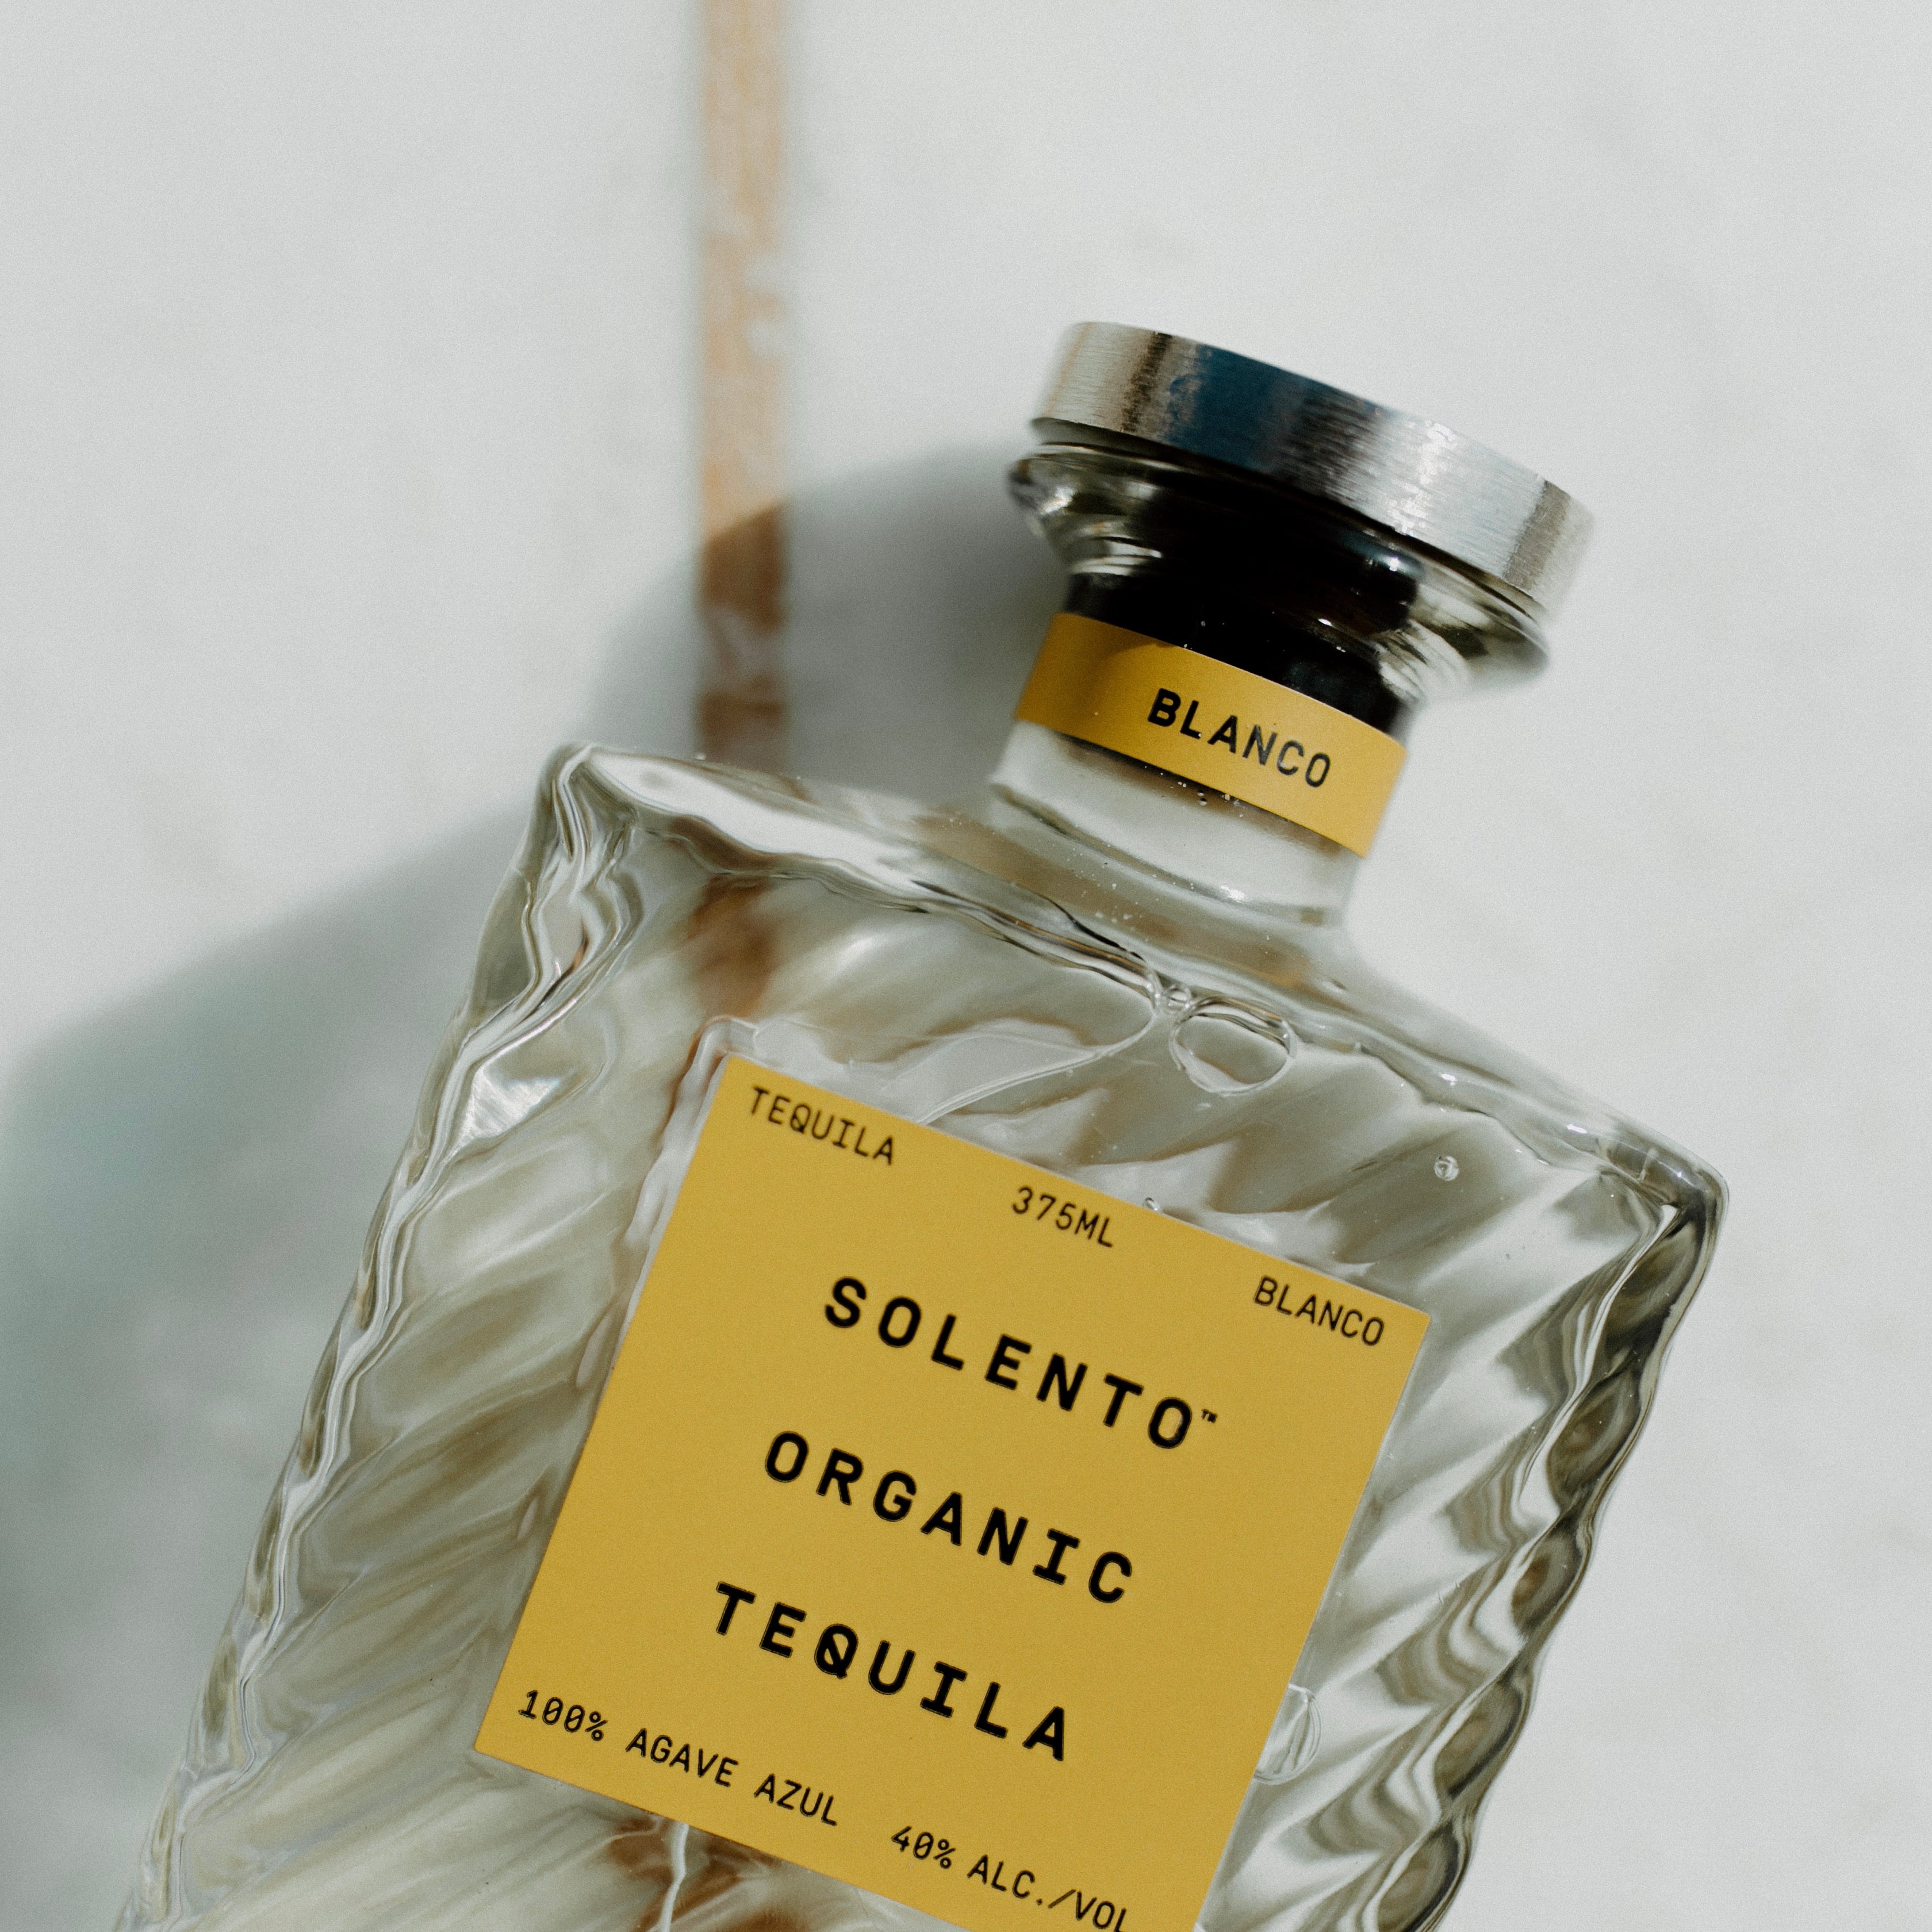 Solento Organic Tequila Blanco (375mL)